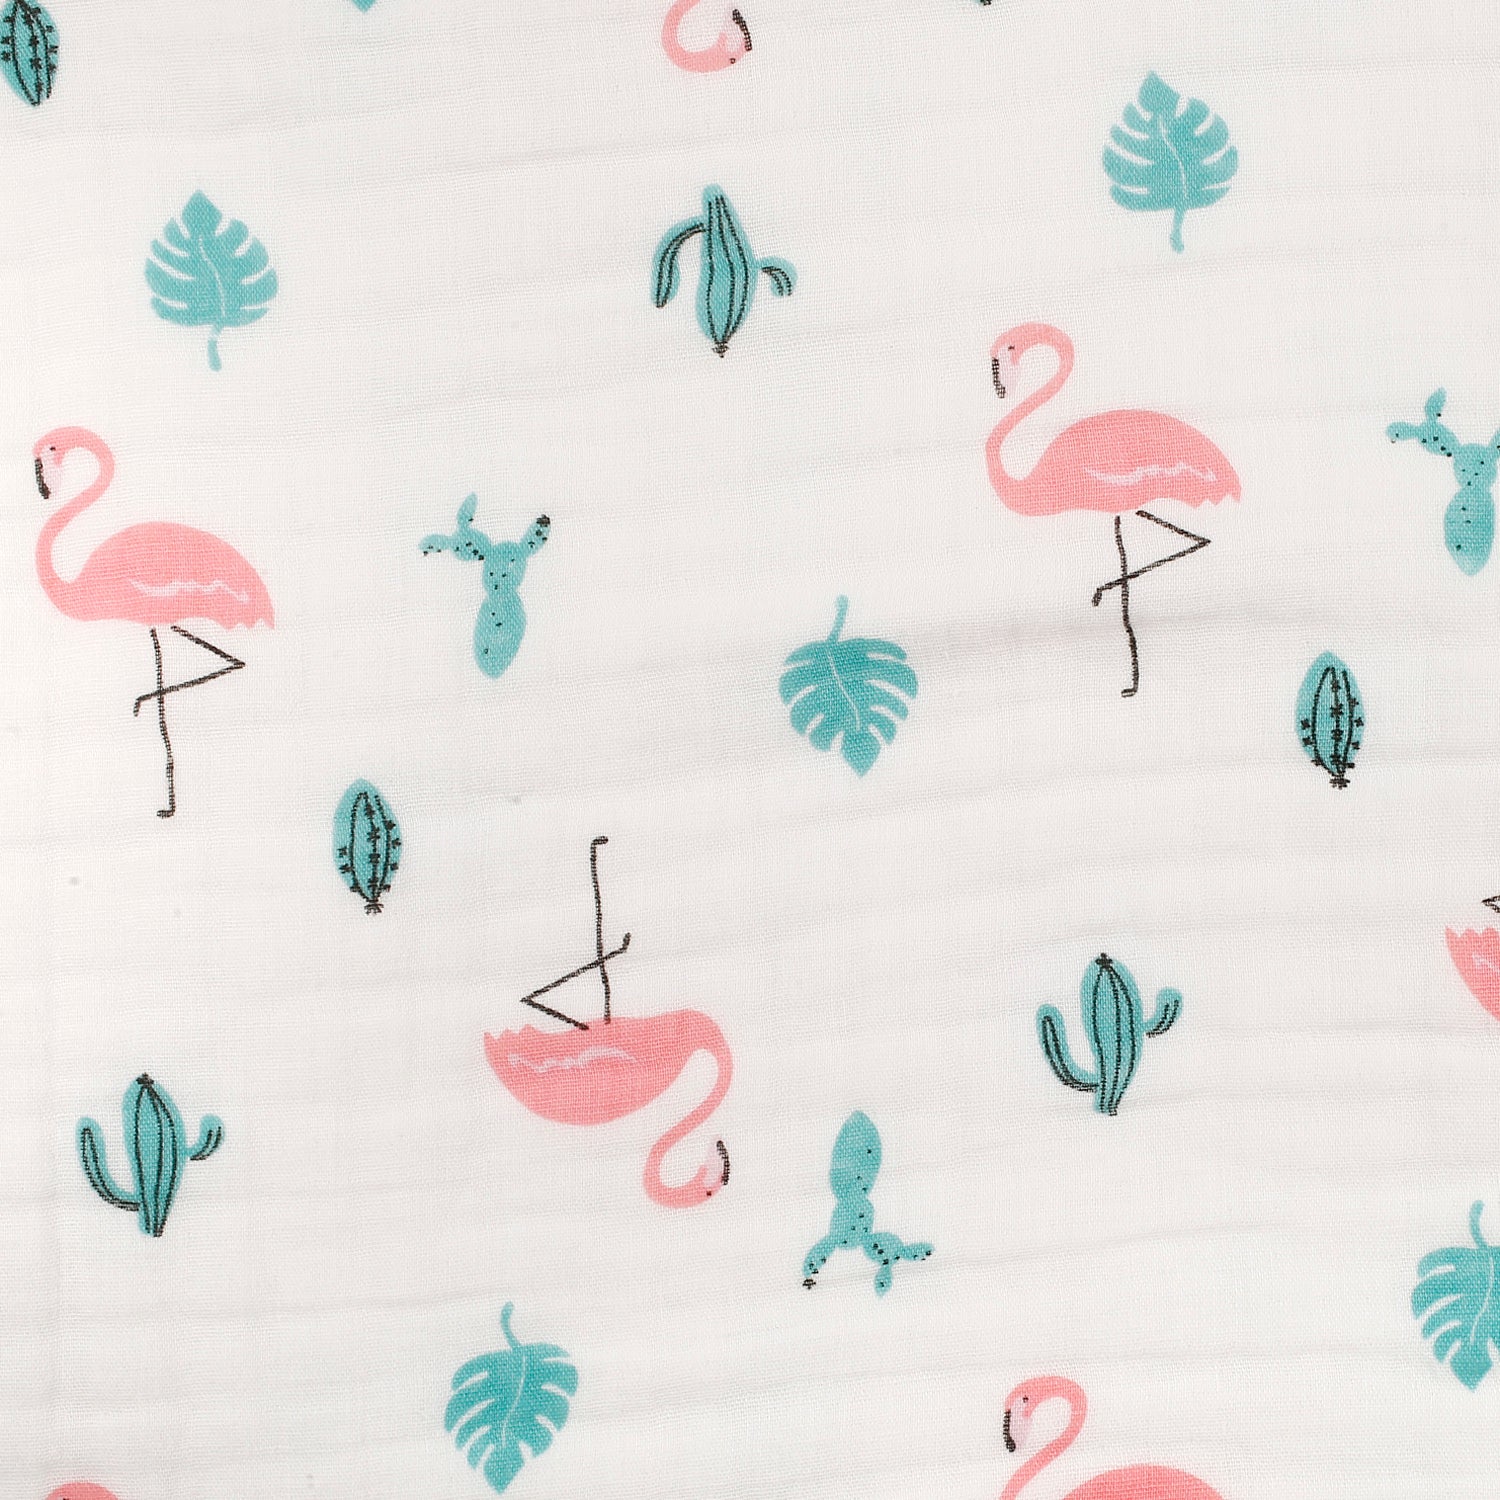 Baby Moo Flamingo White Muslin Blanket